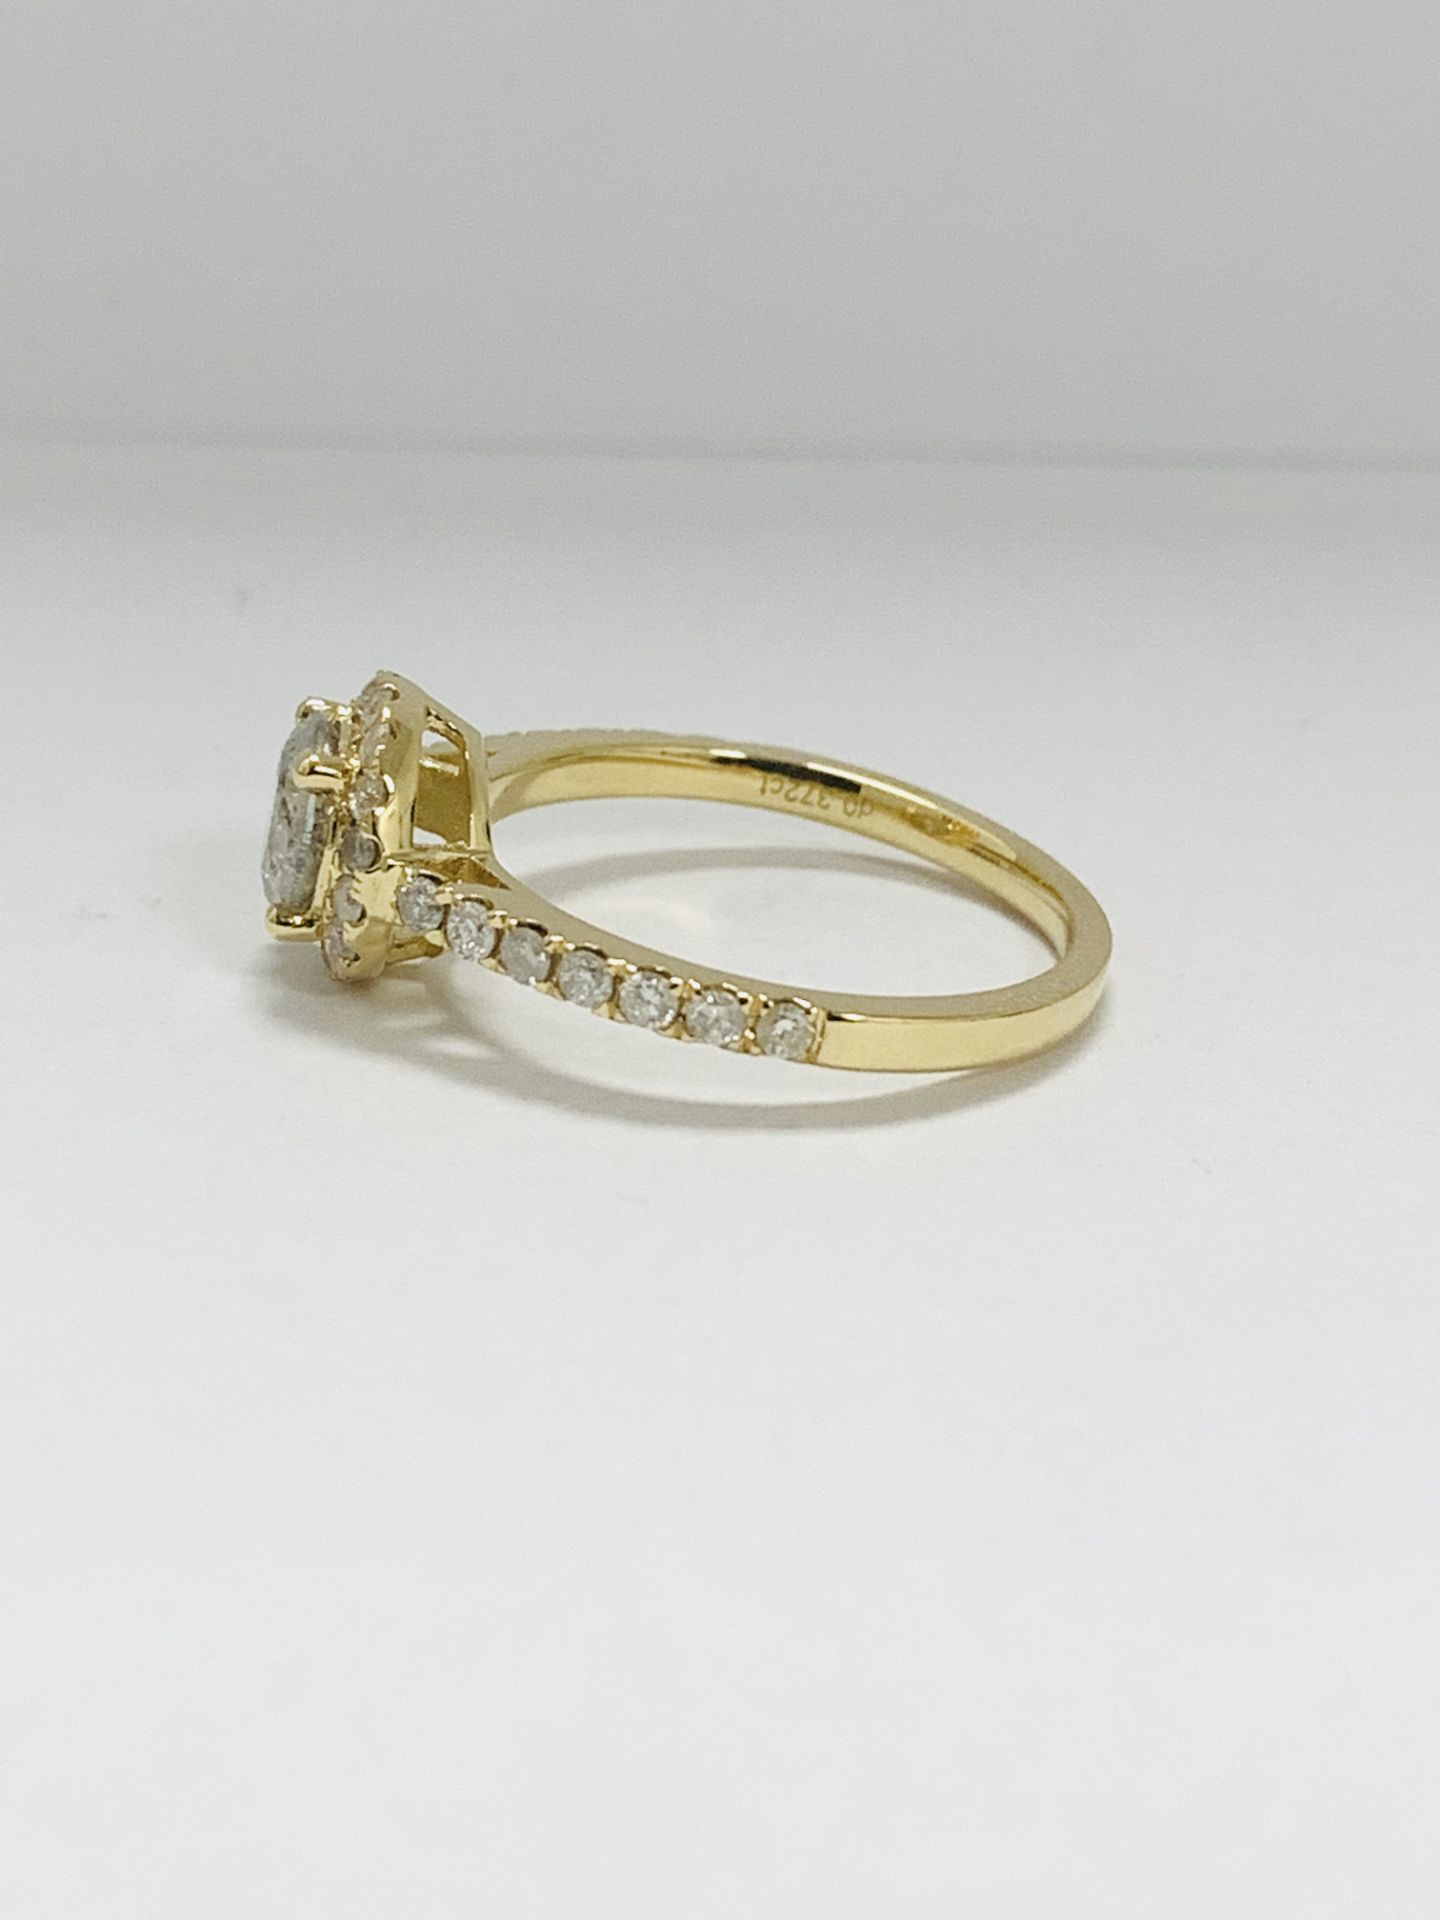 14K Yellow Gold Ring - Image 3 of 8